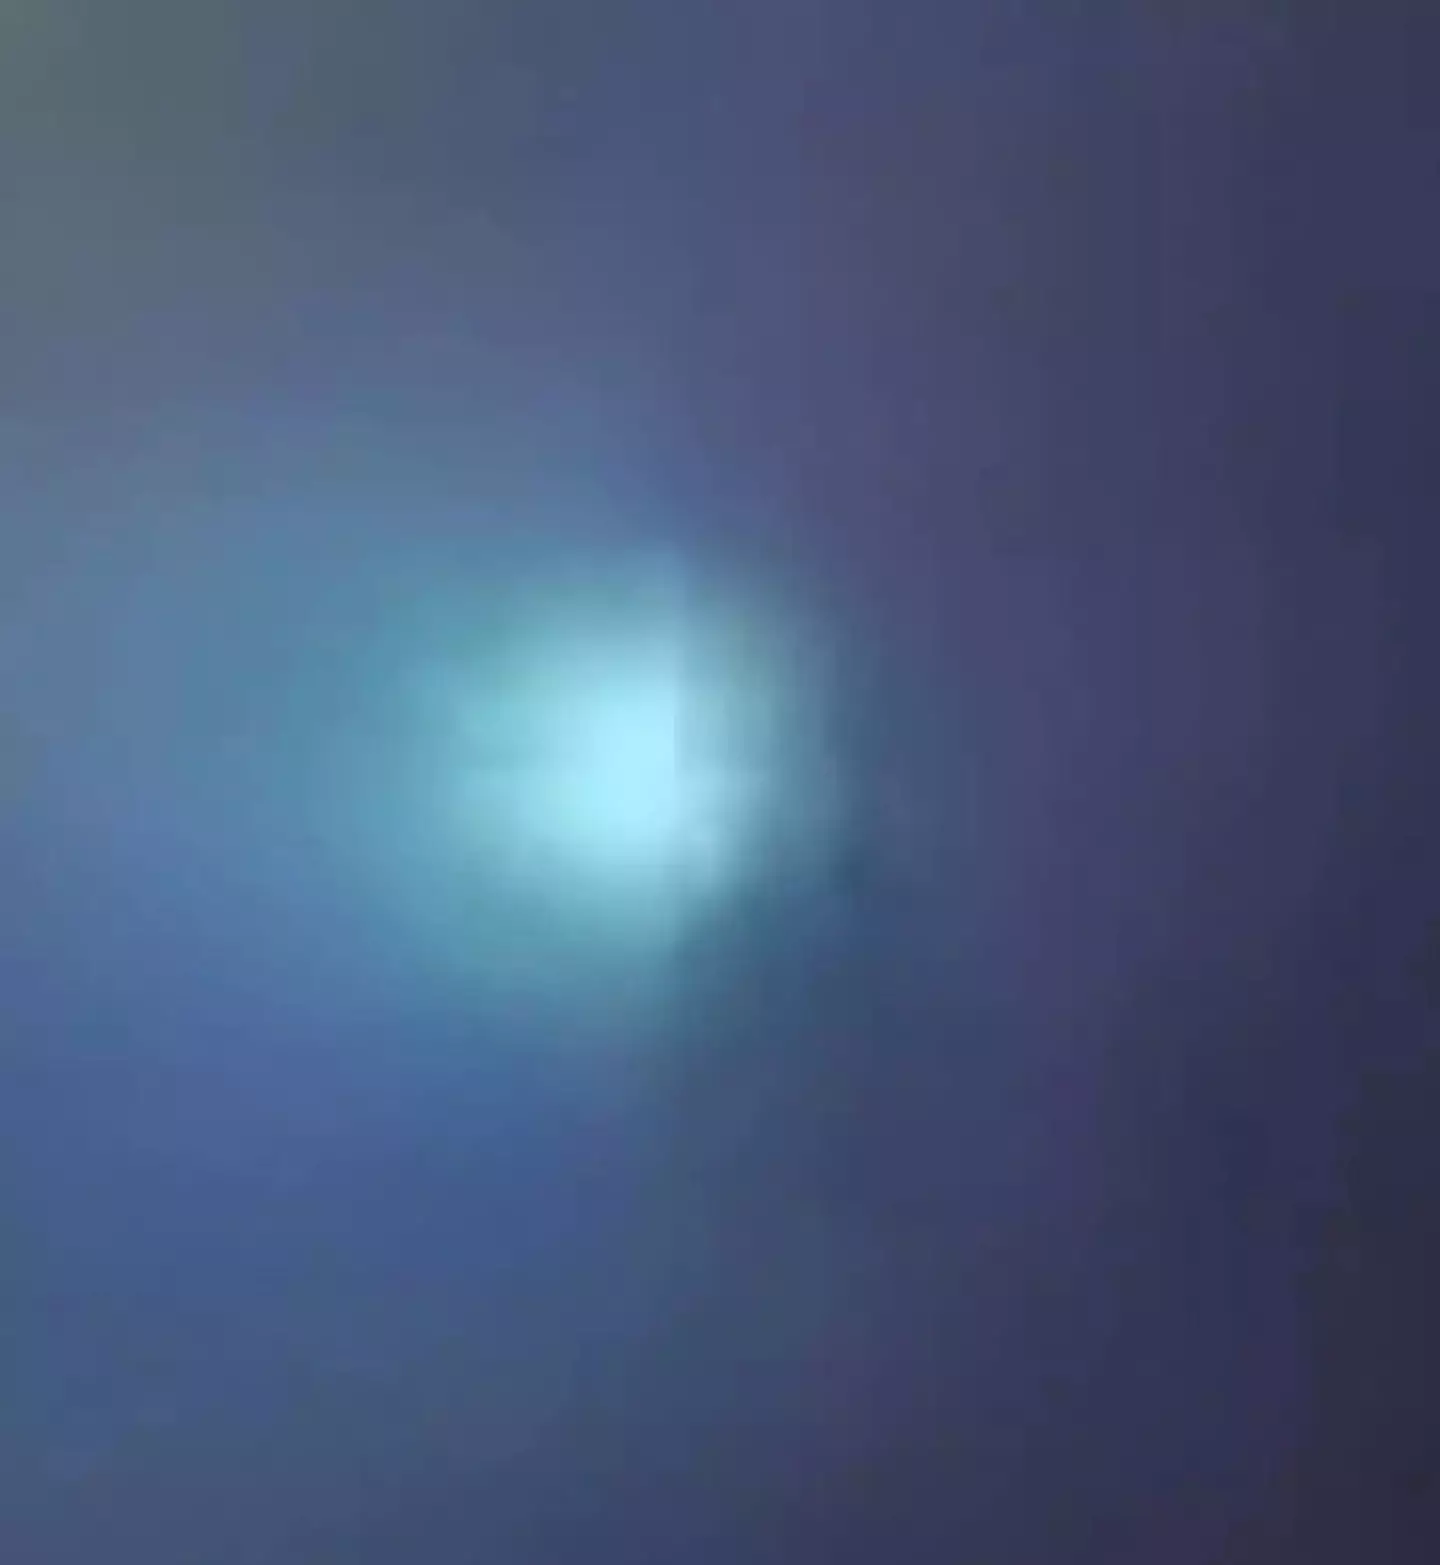 Police bodycam footage seemingly captured UFO sightings.